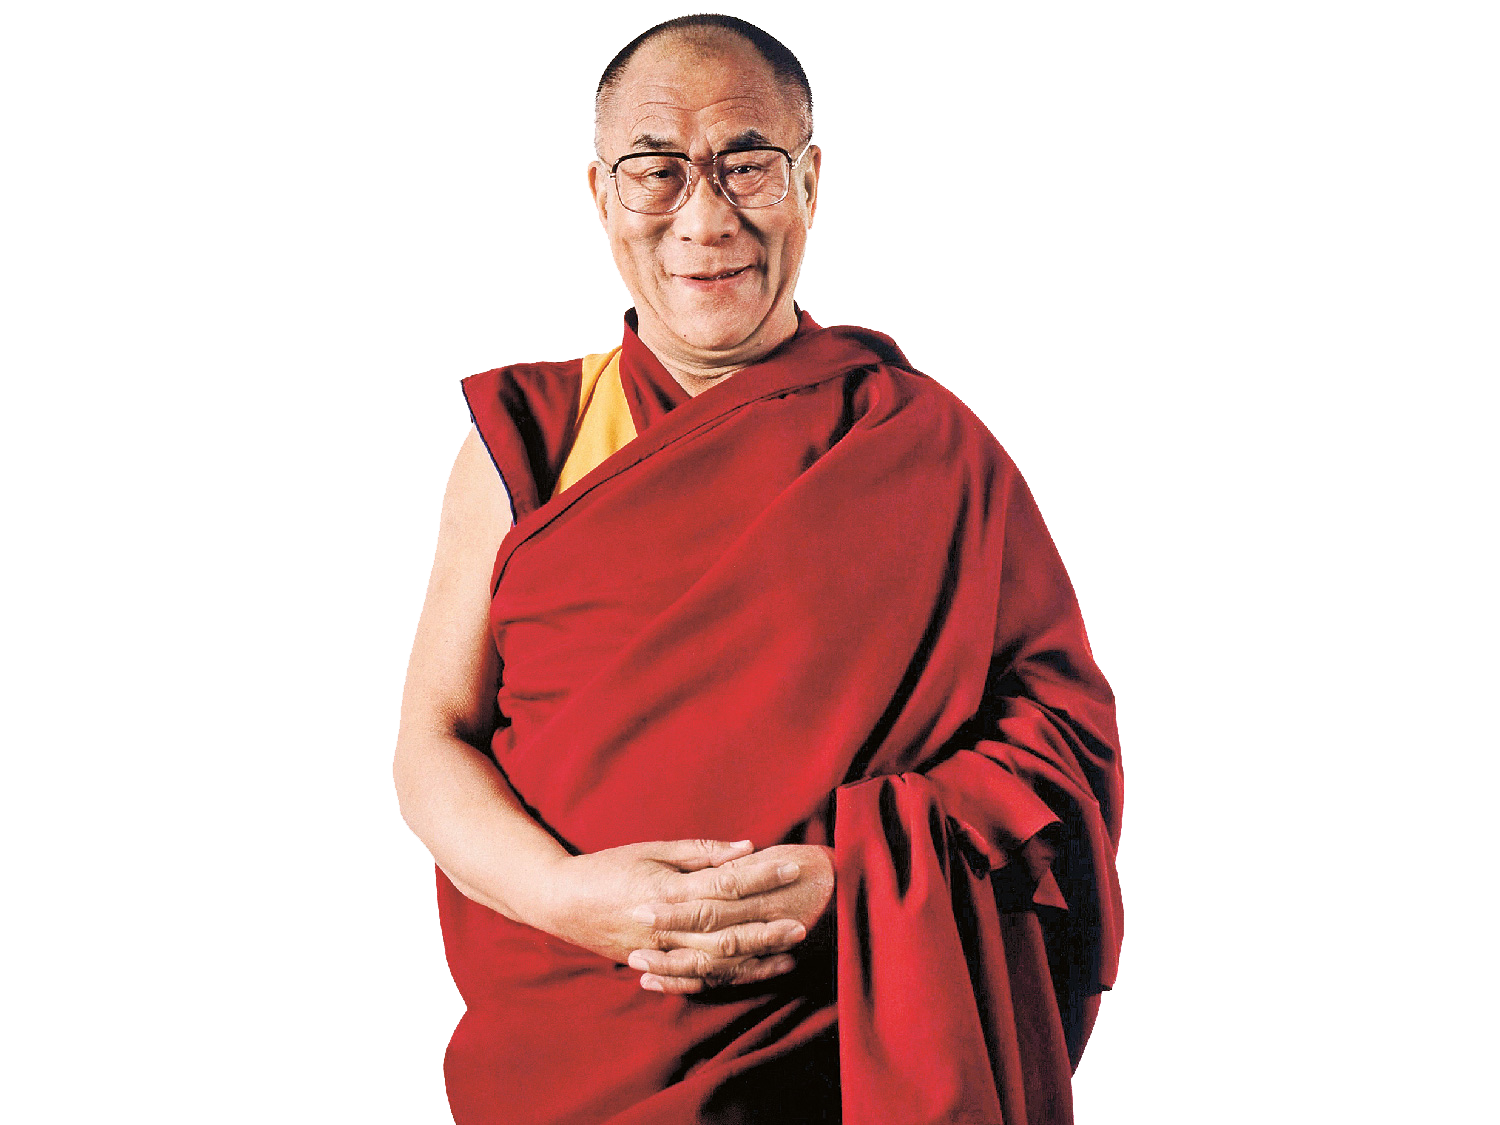 Dalai Lama Transparent Image